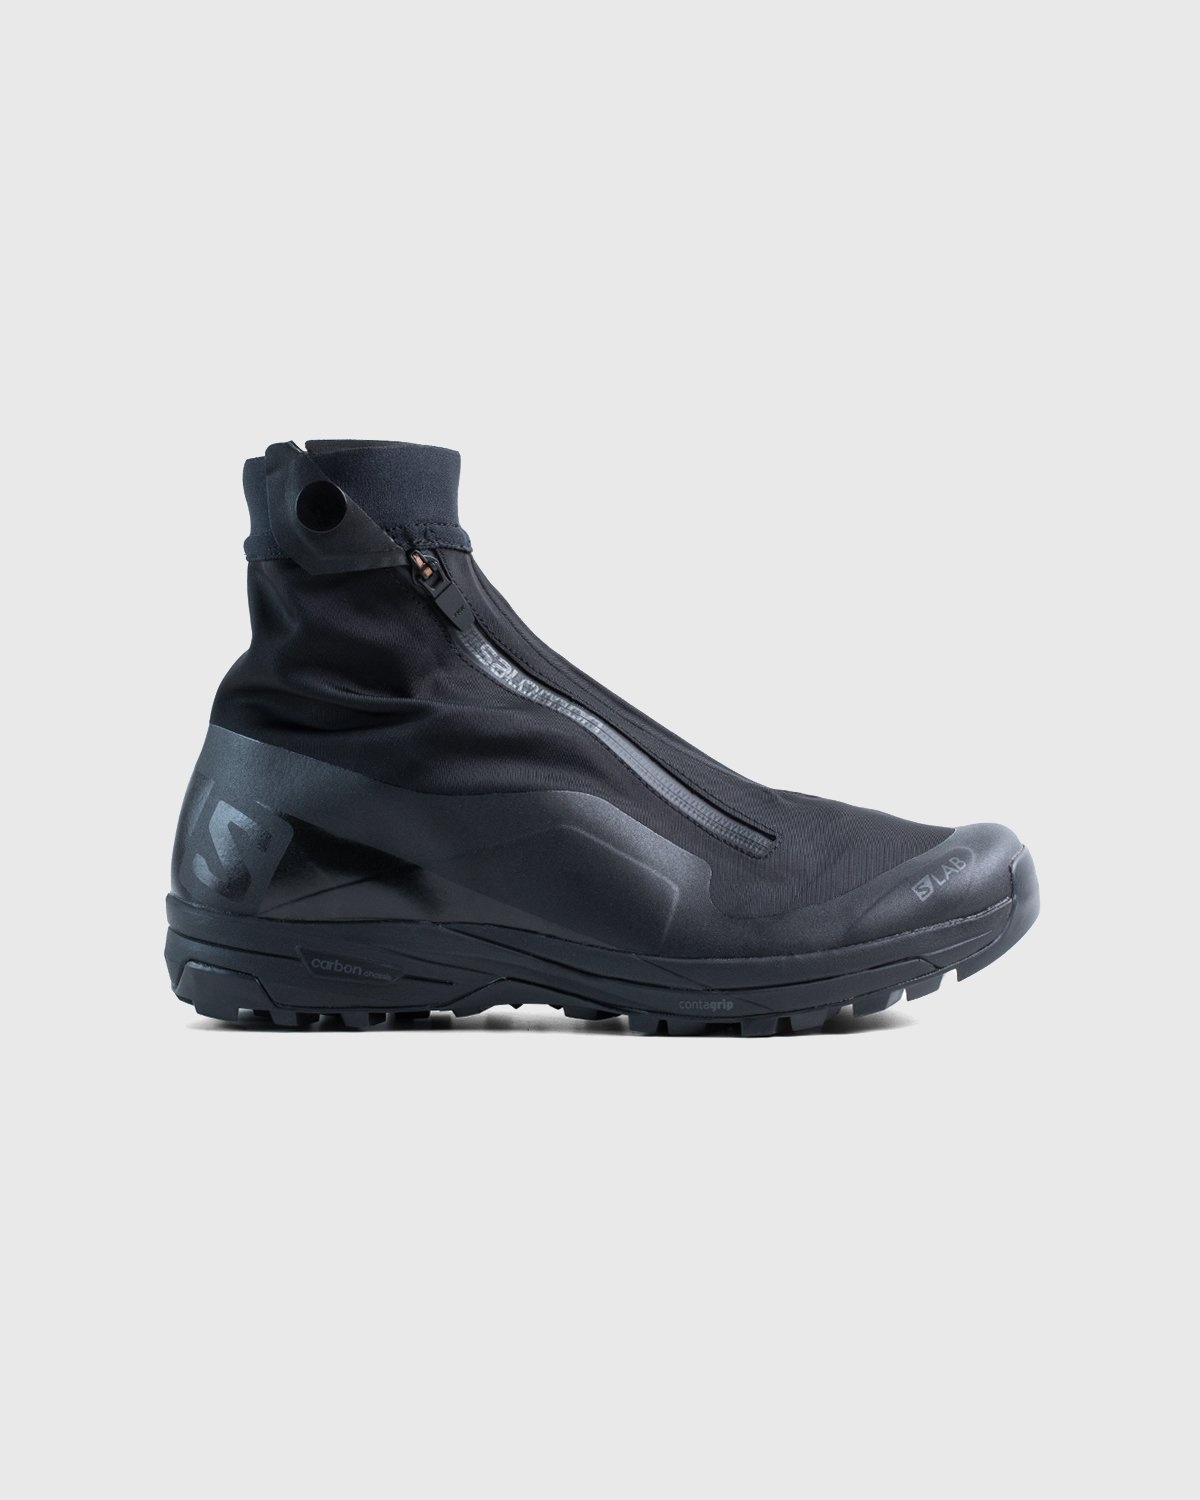 Salomon – S/Lab XA-Alpine 2 Limited Edition Black - Sneakers - Black - Image 1